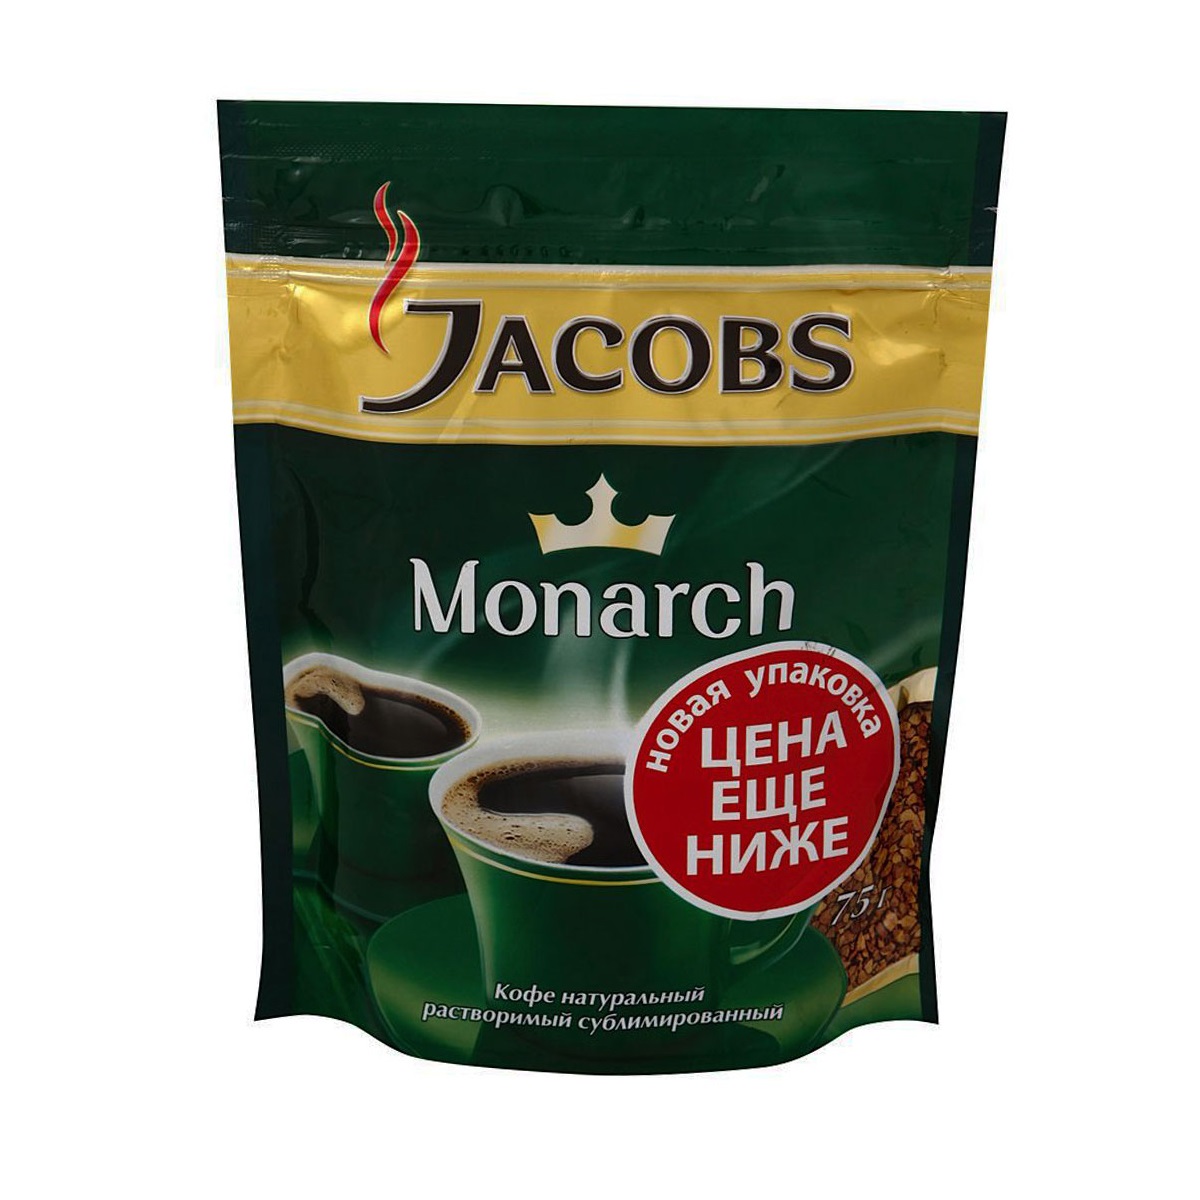 Кофе 500 рублей. Jacobs Monarch 75г пакет. Кофе Jacobs Monarch, 75г. Кофе Якобс Монарх пакет 500г. Якобс Монарх (пакет) 500 г.